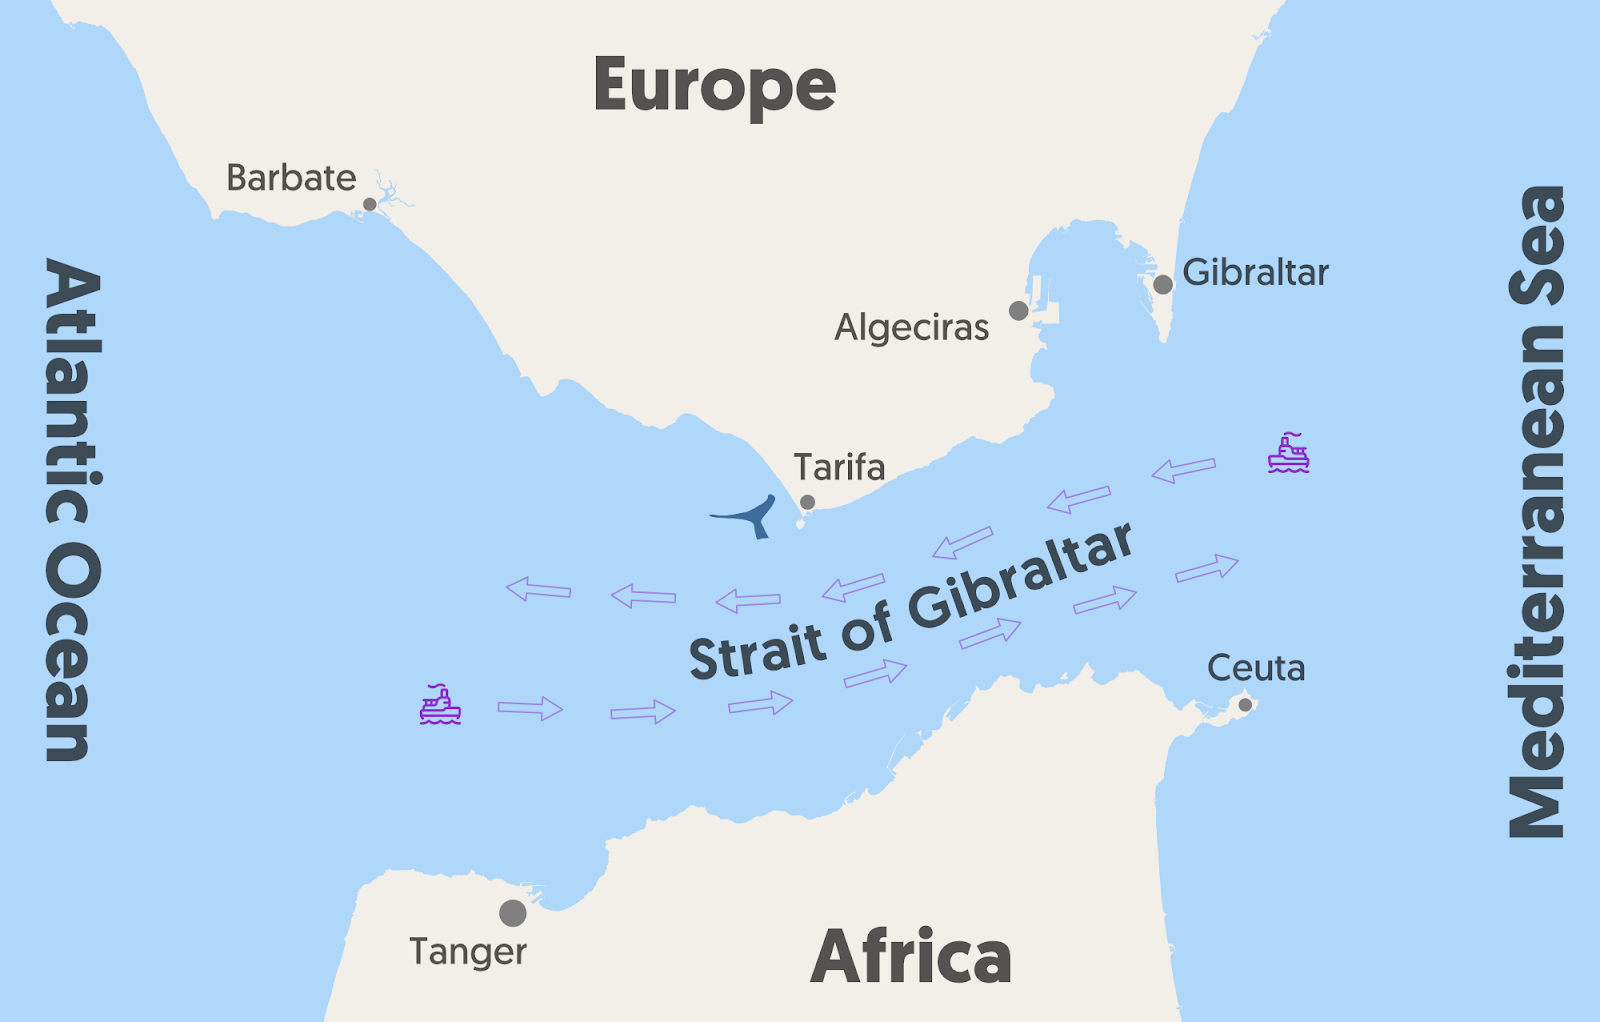 The Strait of Gibraltar map